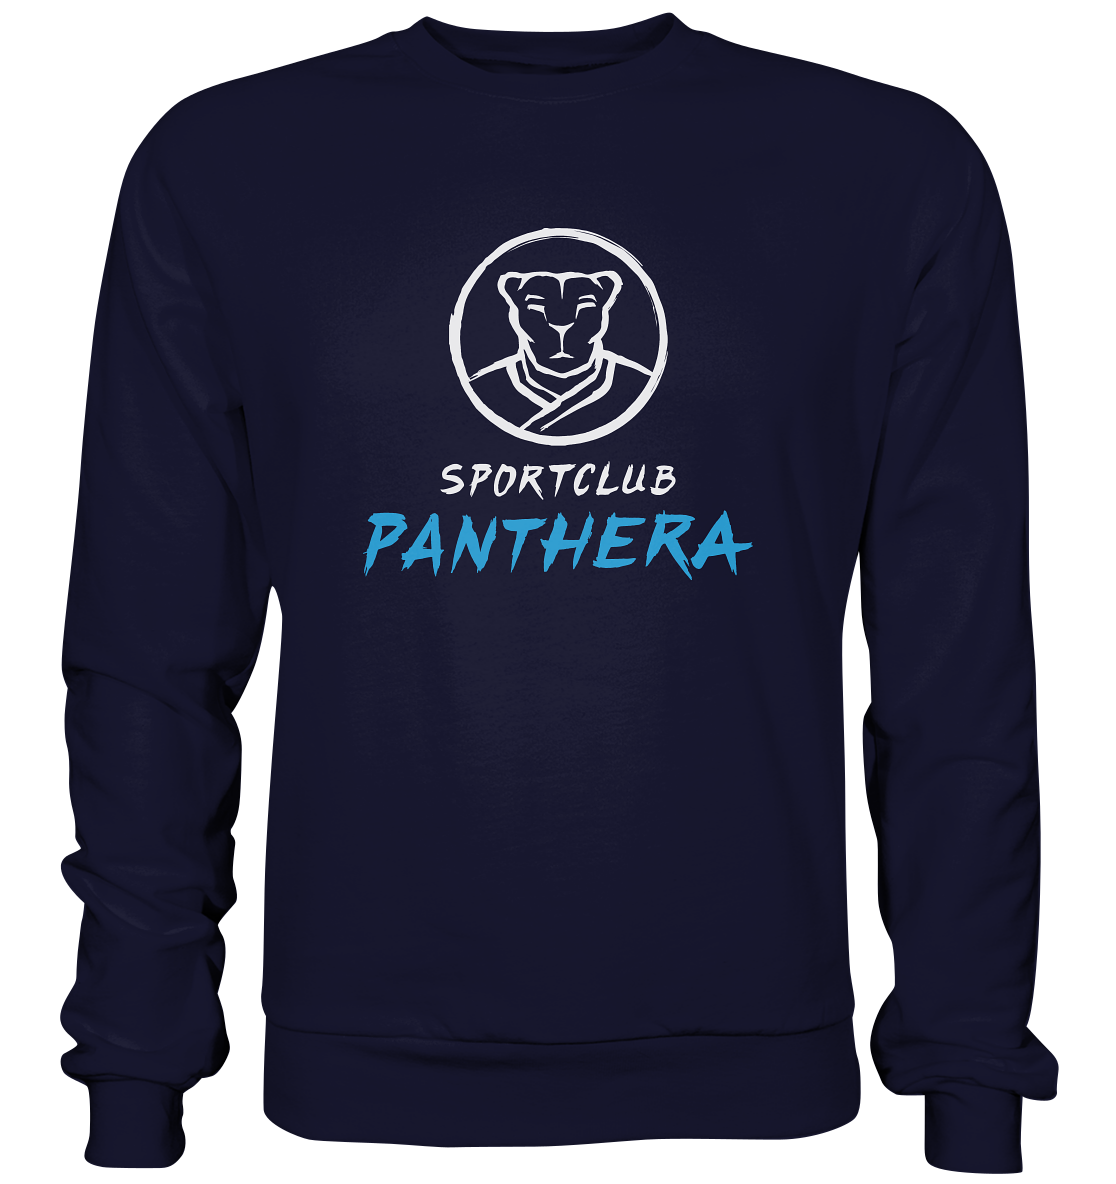 SPORTCLUB PANTHERA - Basic Sweatshirt